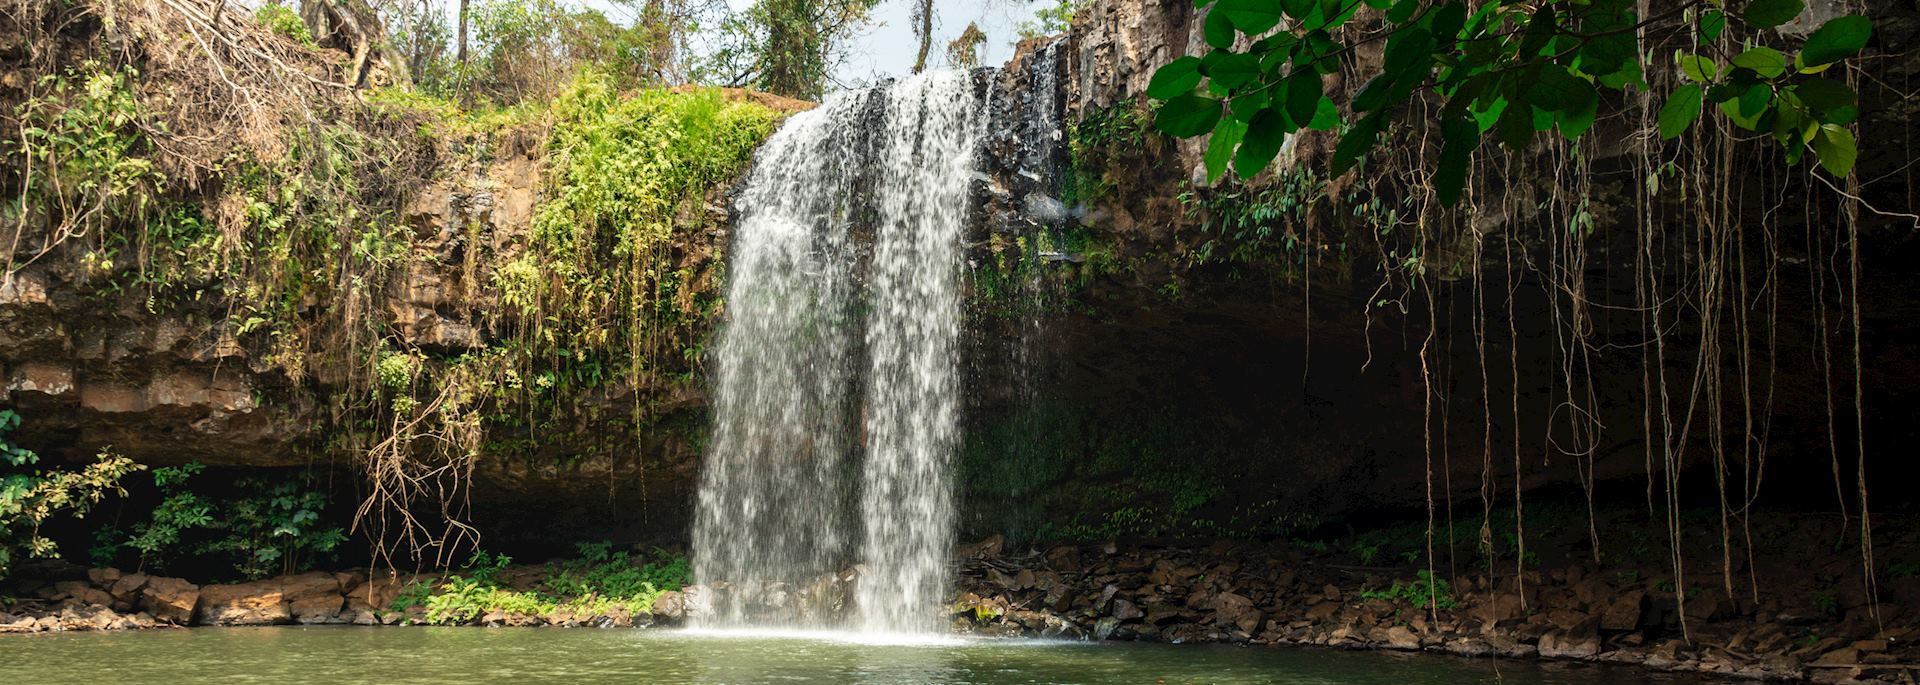 Waterfall in Ratanakiri province